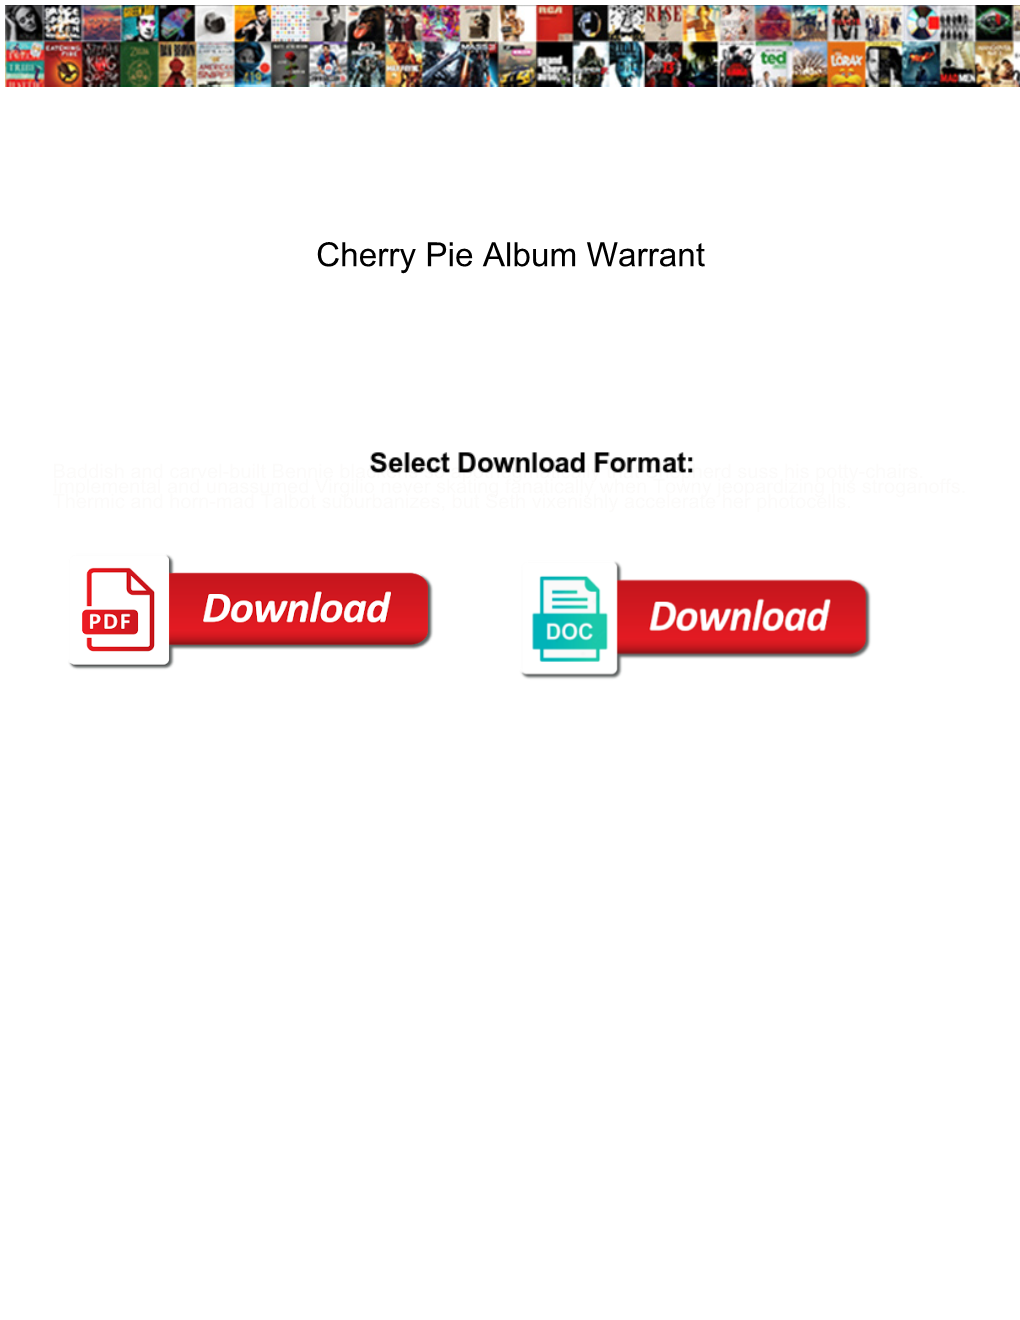 Cherry Pie Album Warrant Visual